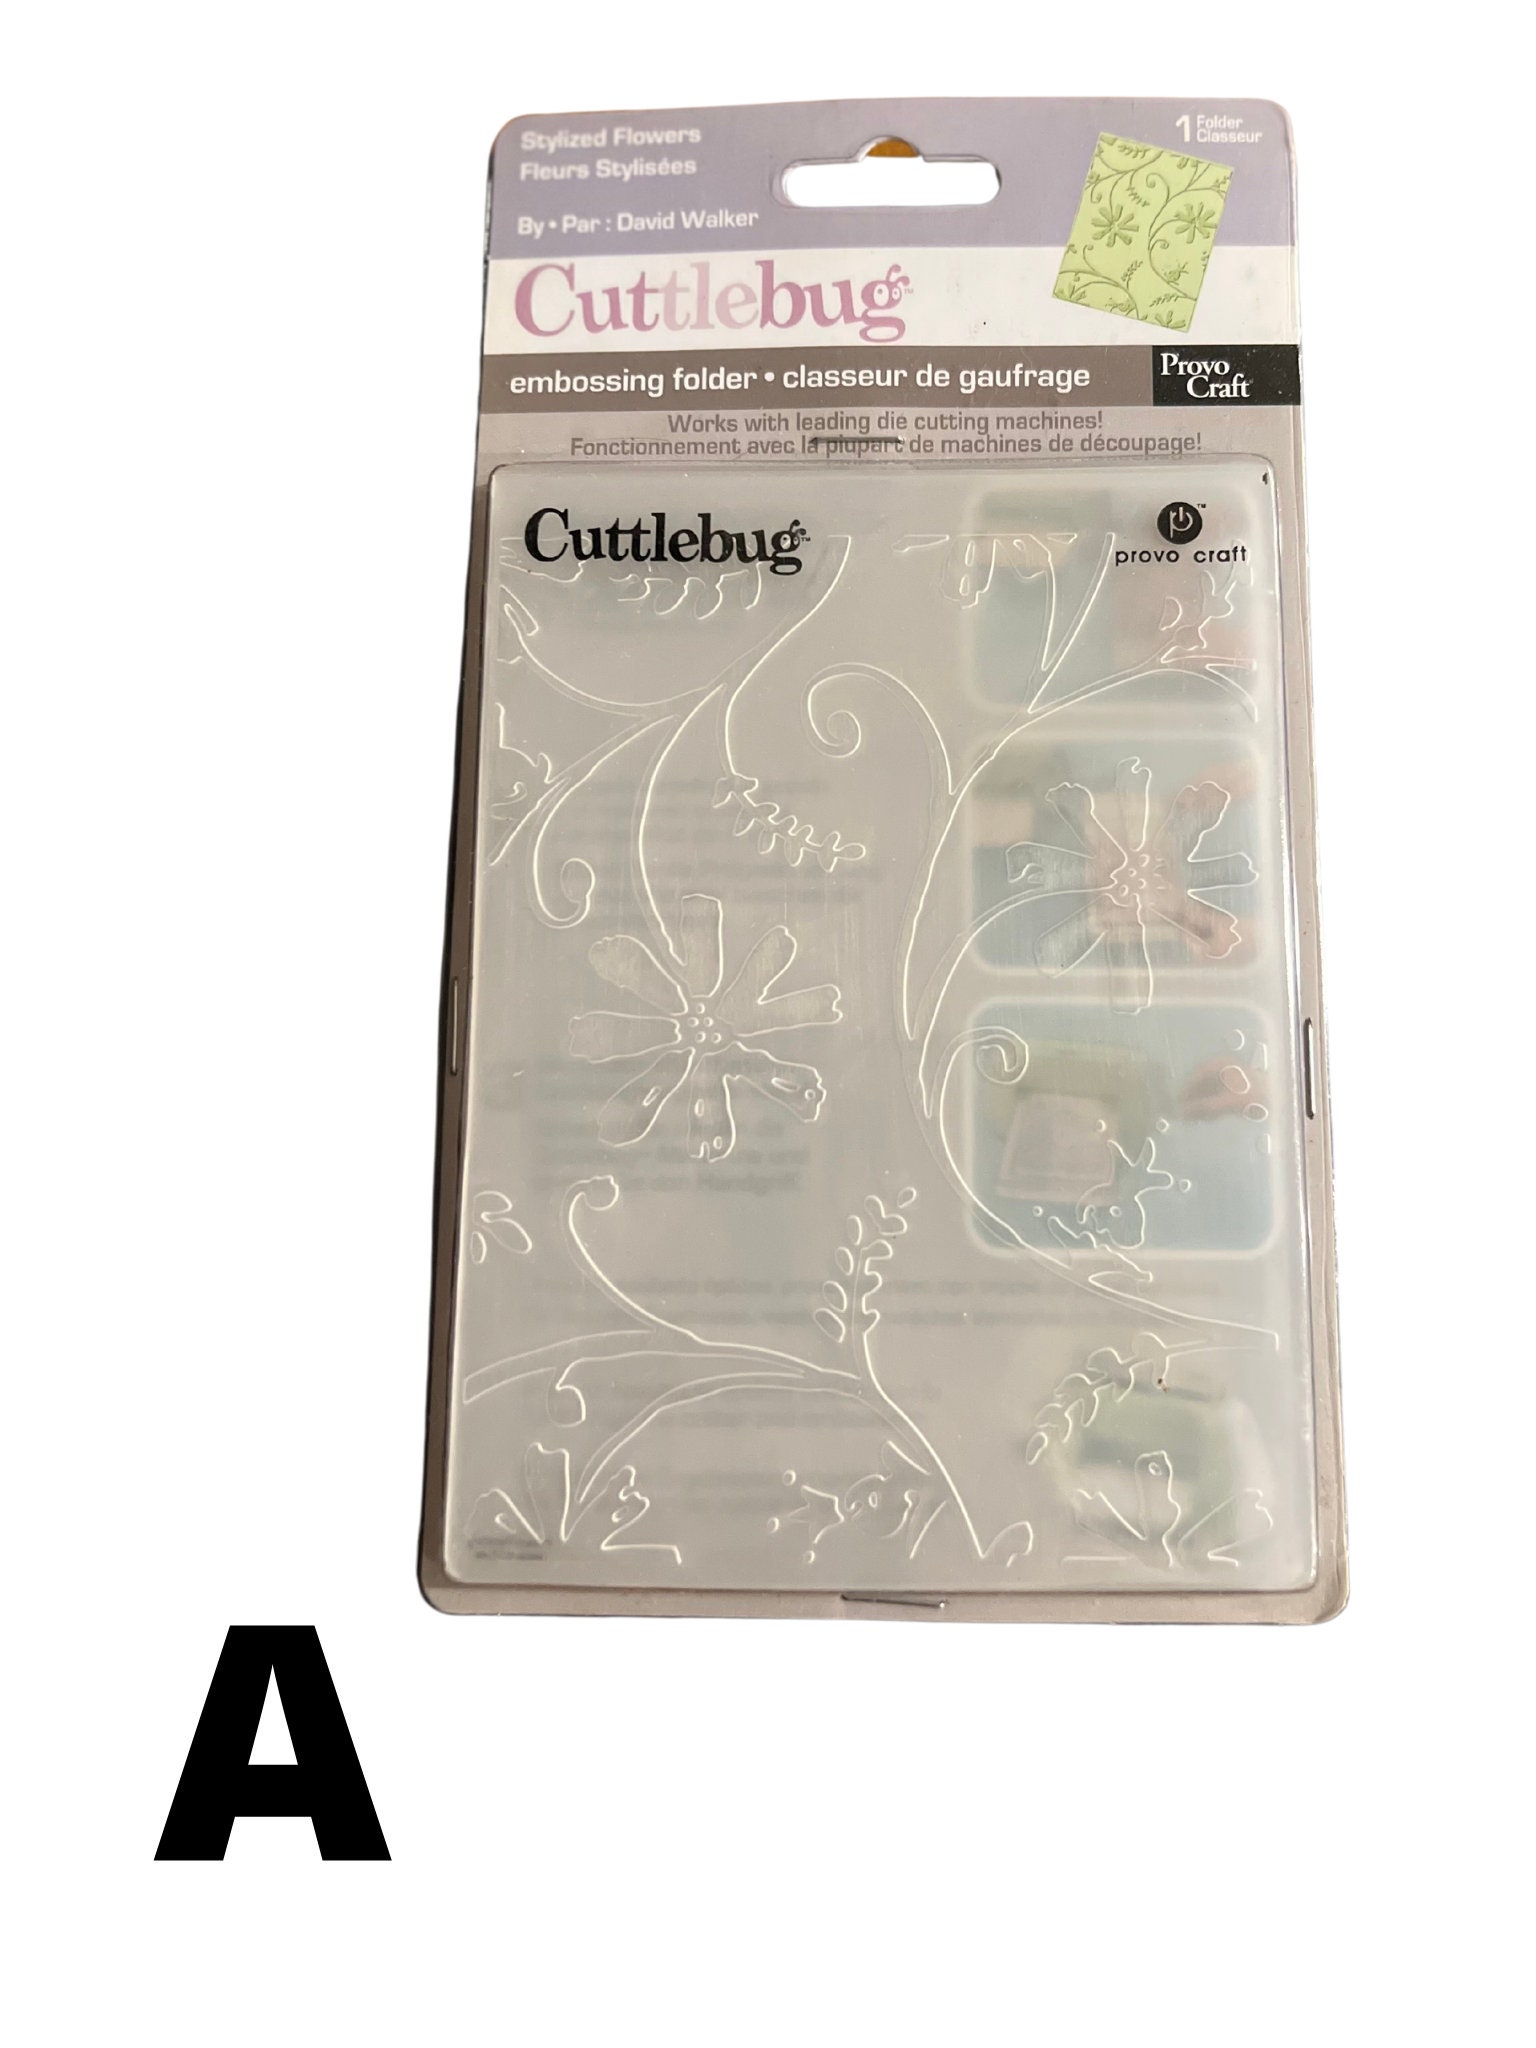 Cuttlebug Machine Review - Cuttlebug Dies & Embossing Capabilities